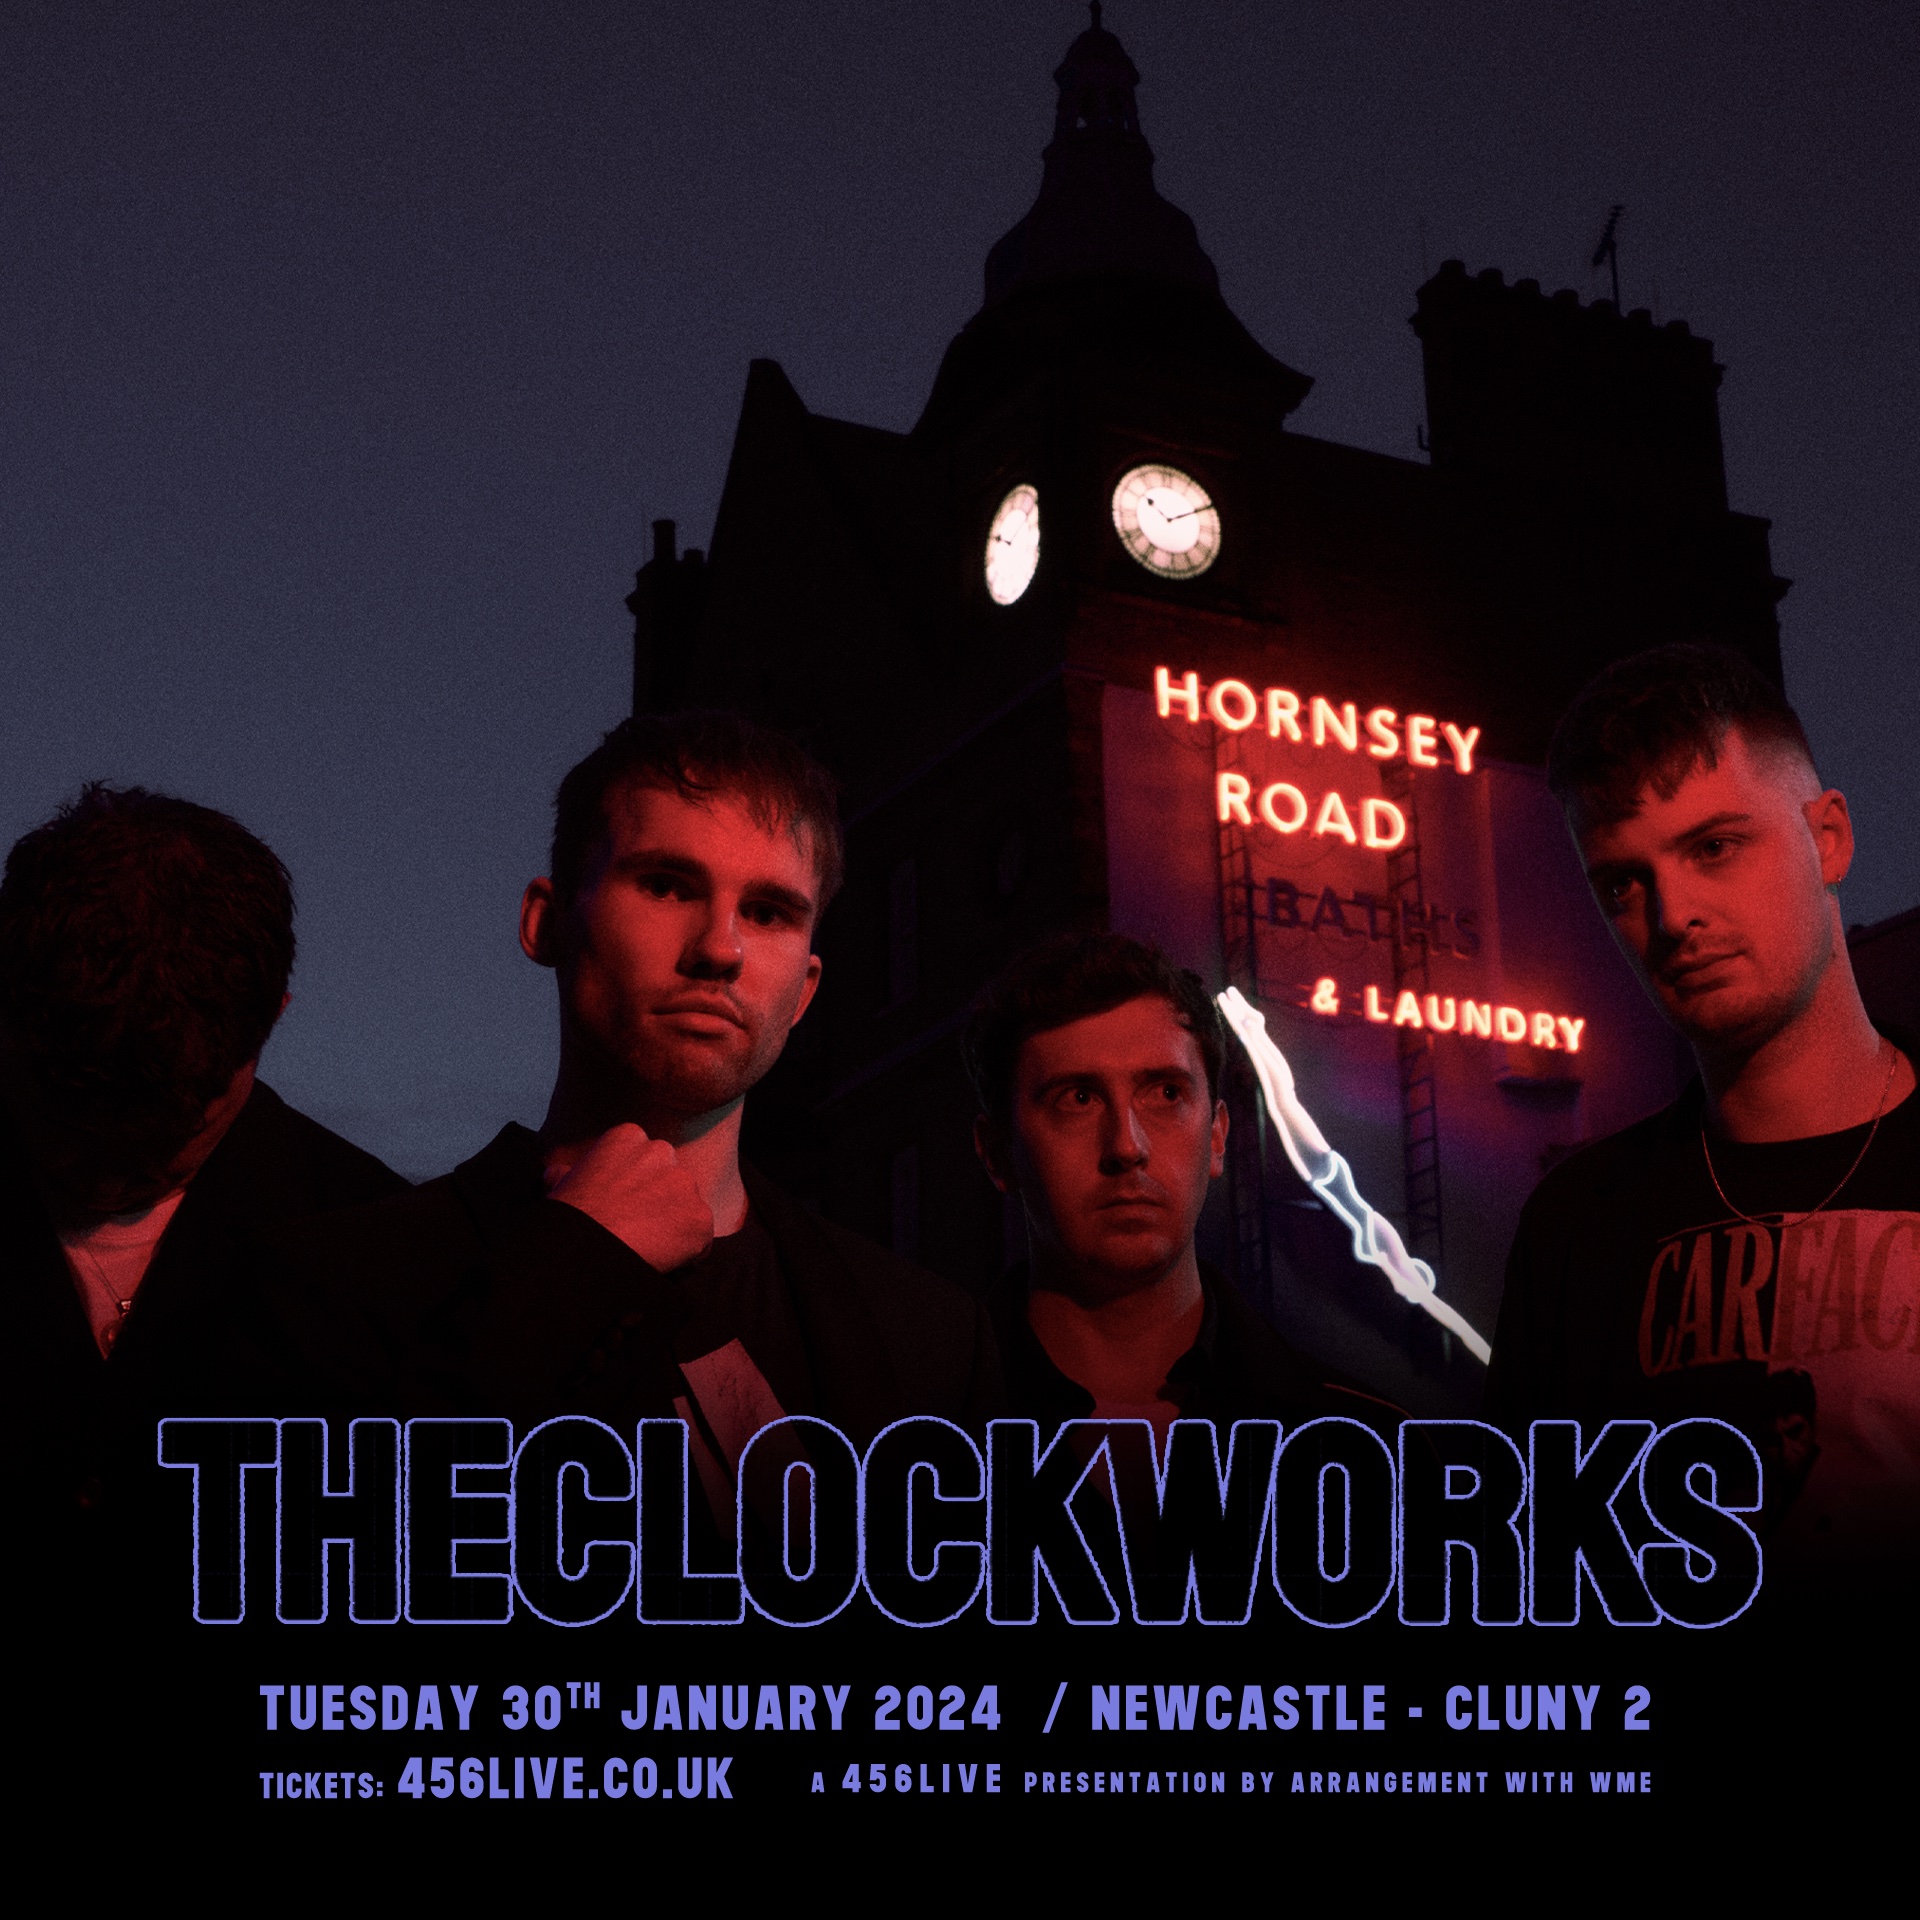 The Clockworks | Newcastle